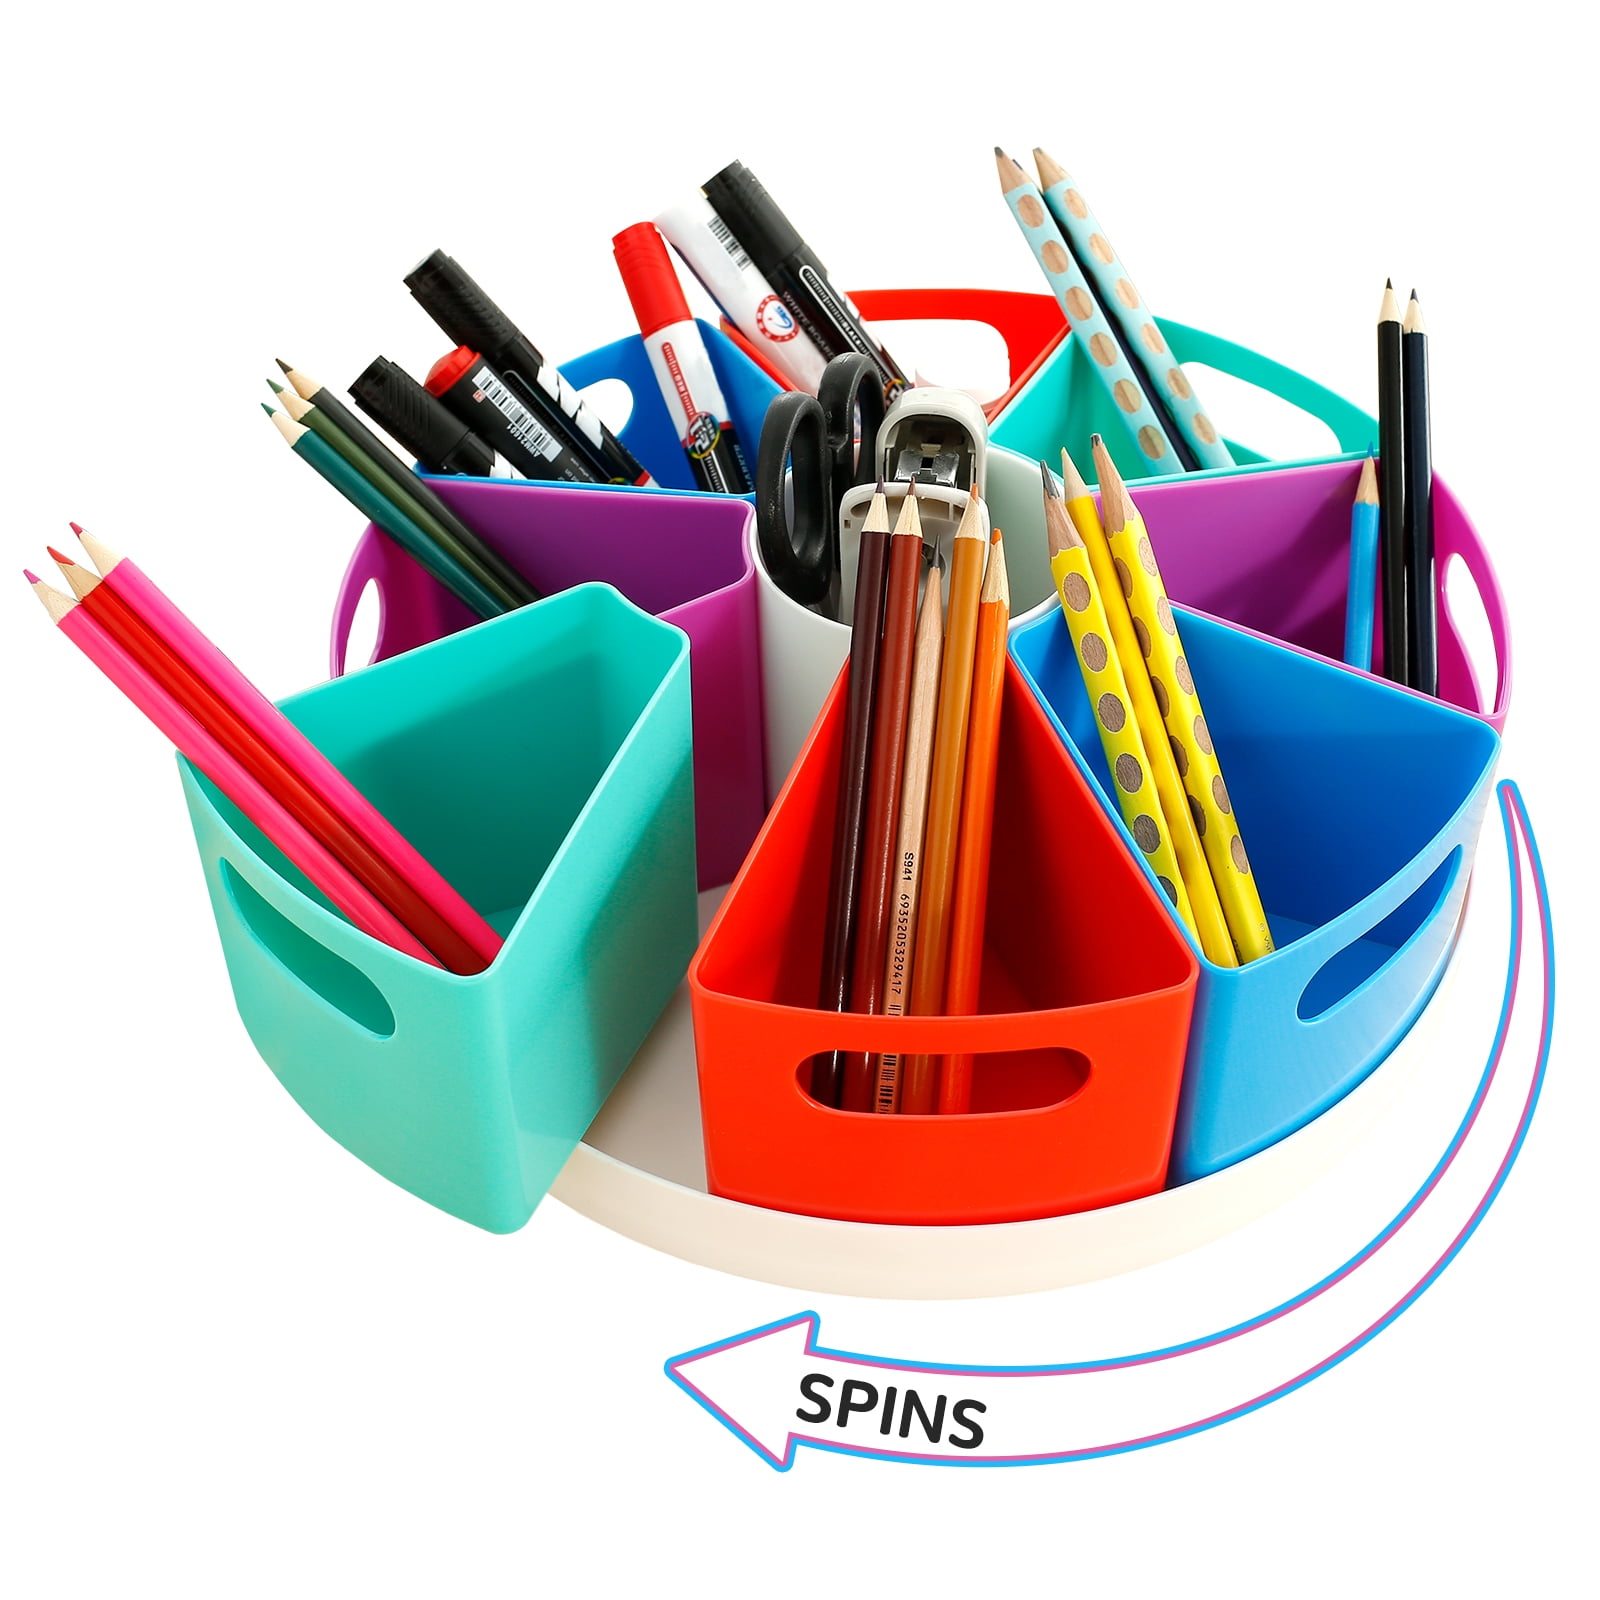 MeCids Art Supply Storage and Organizer - 360° Spinning Pen Holder